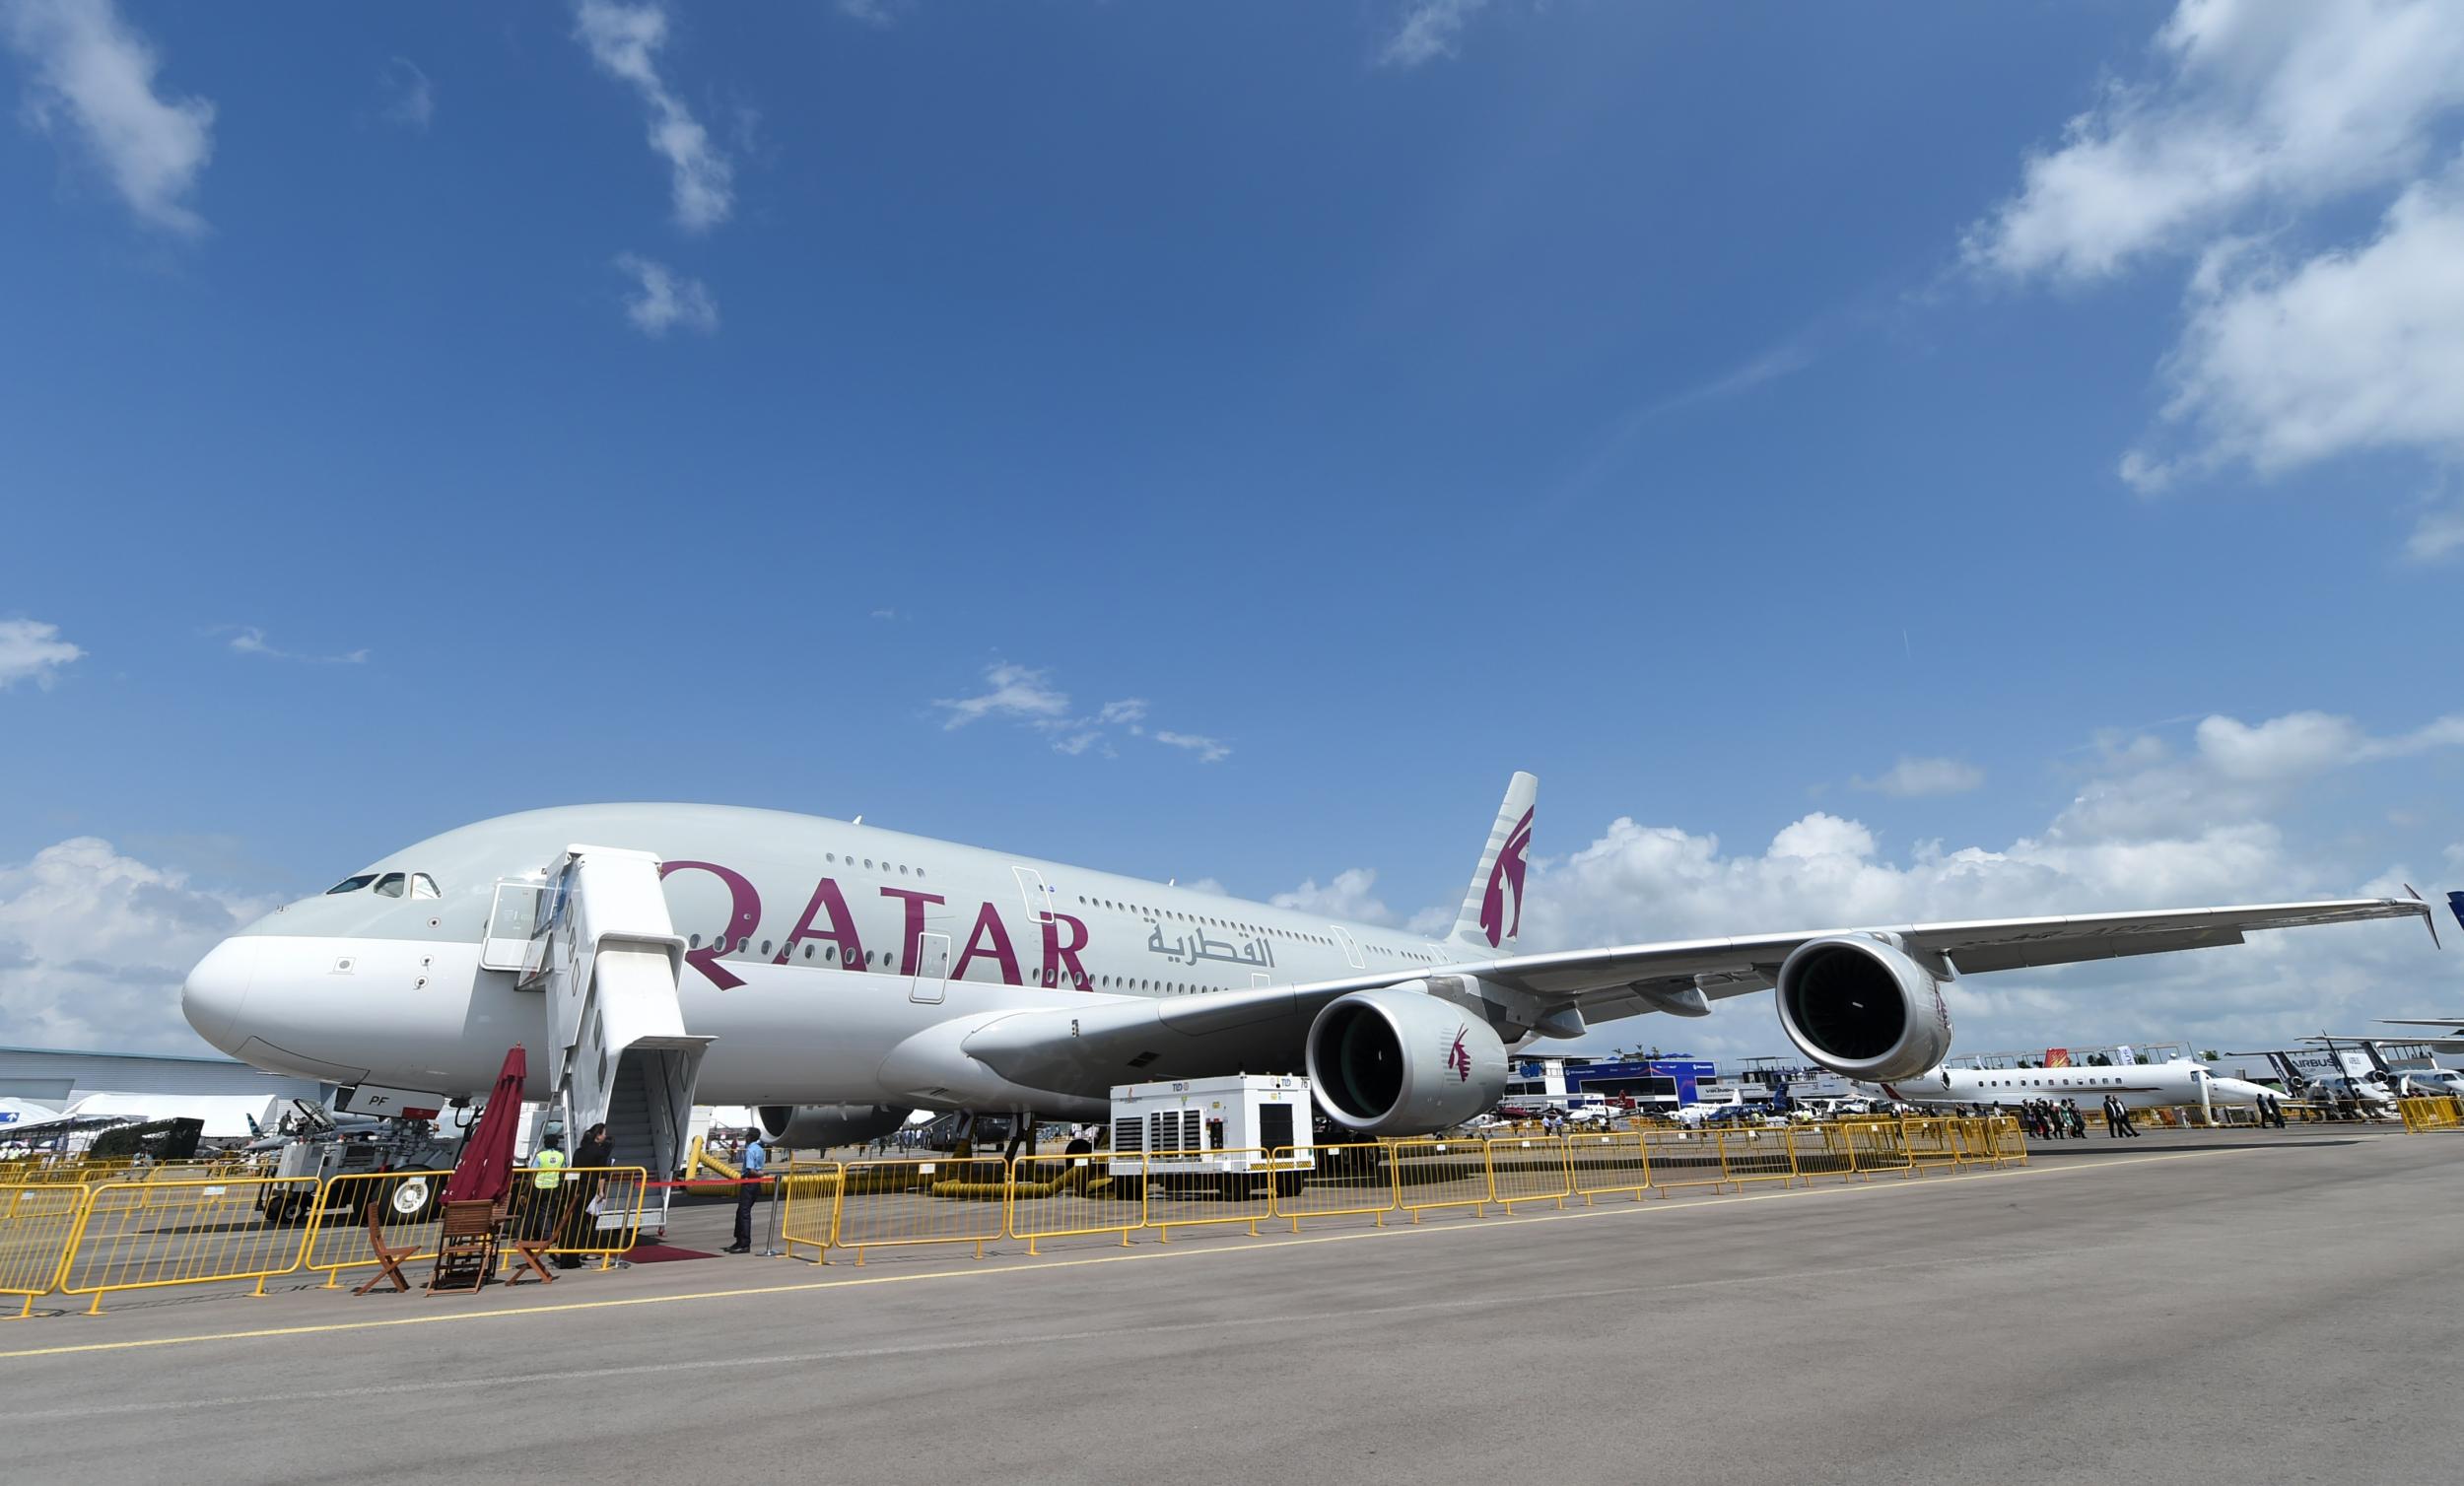 Qatar Airways' inflight meal was unappetising, but allergen-free